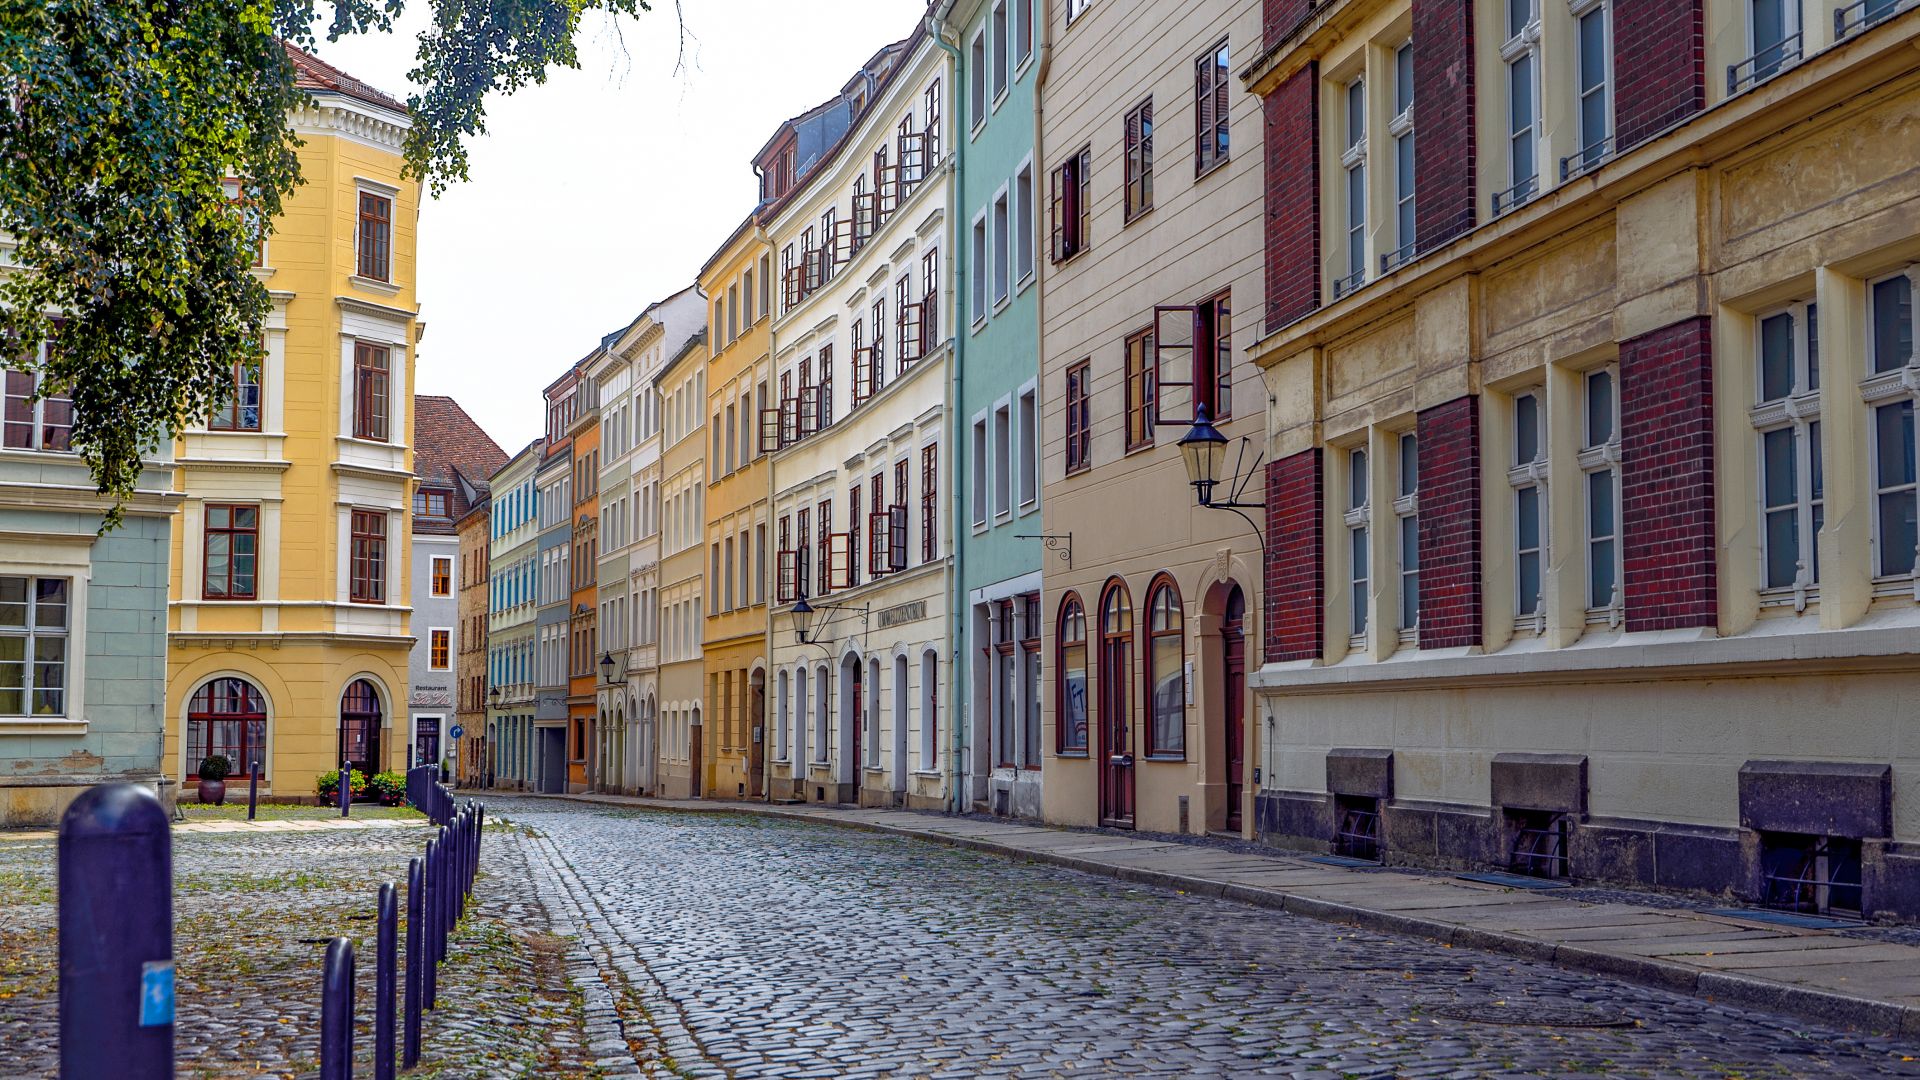 Görlitz: Cobblestoned street in the Old Town